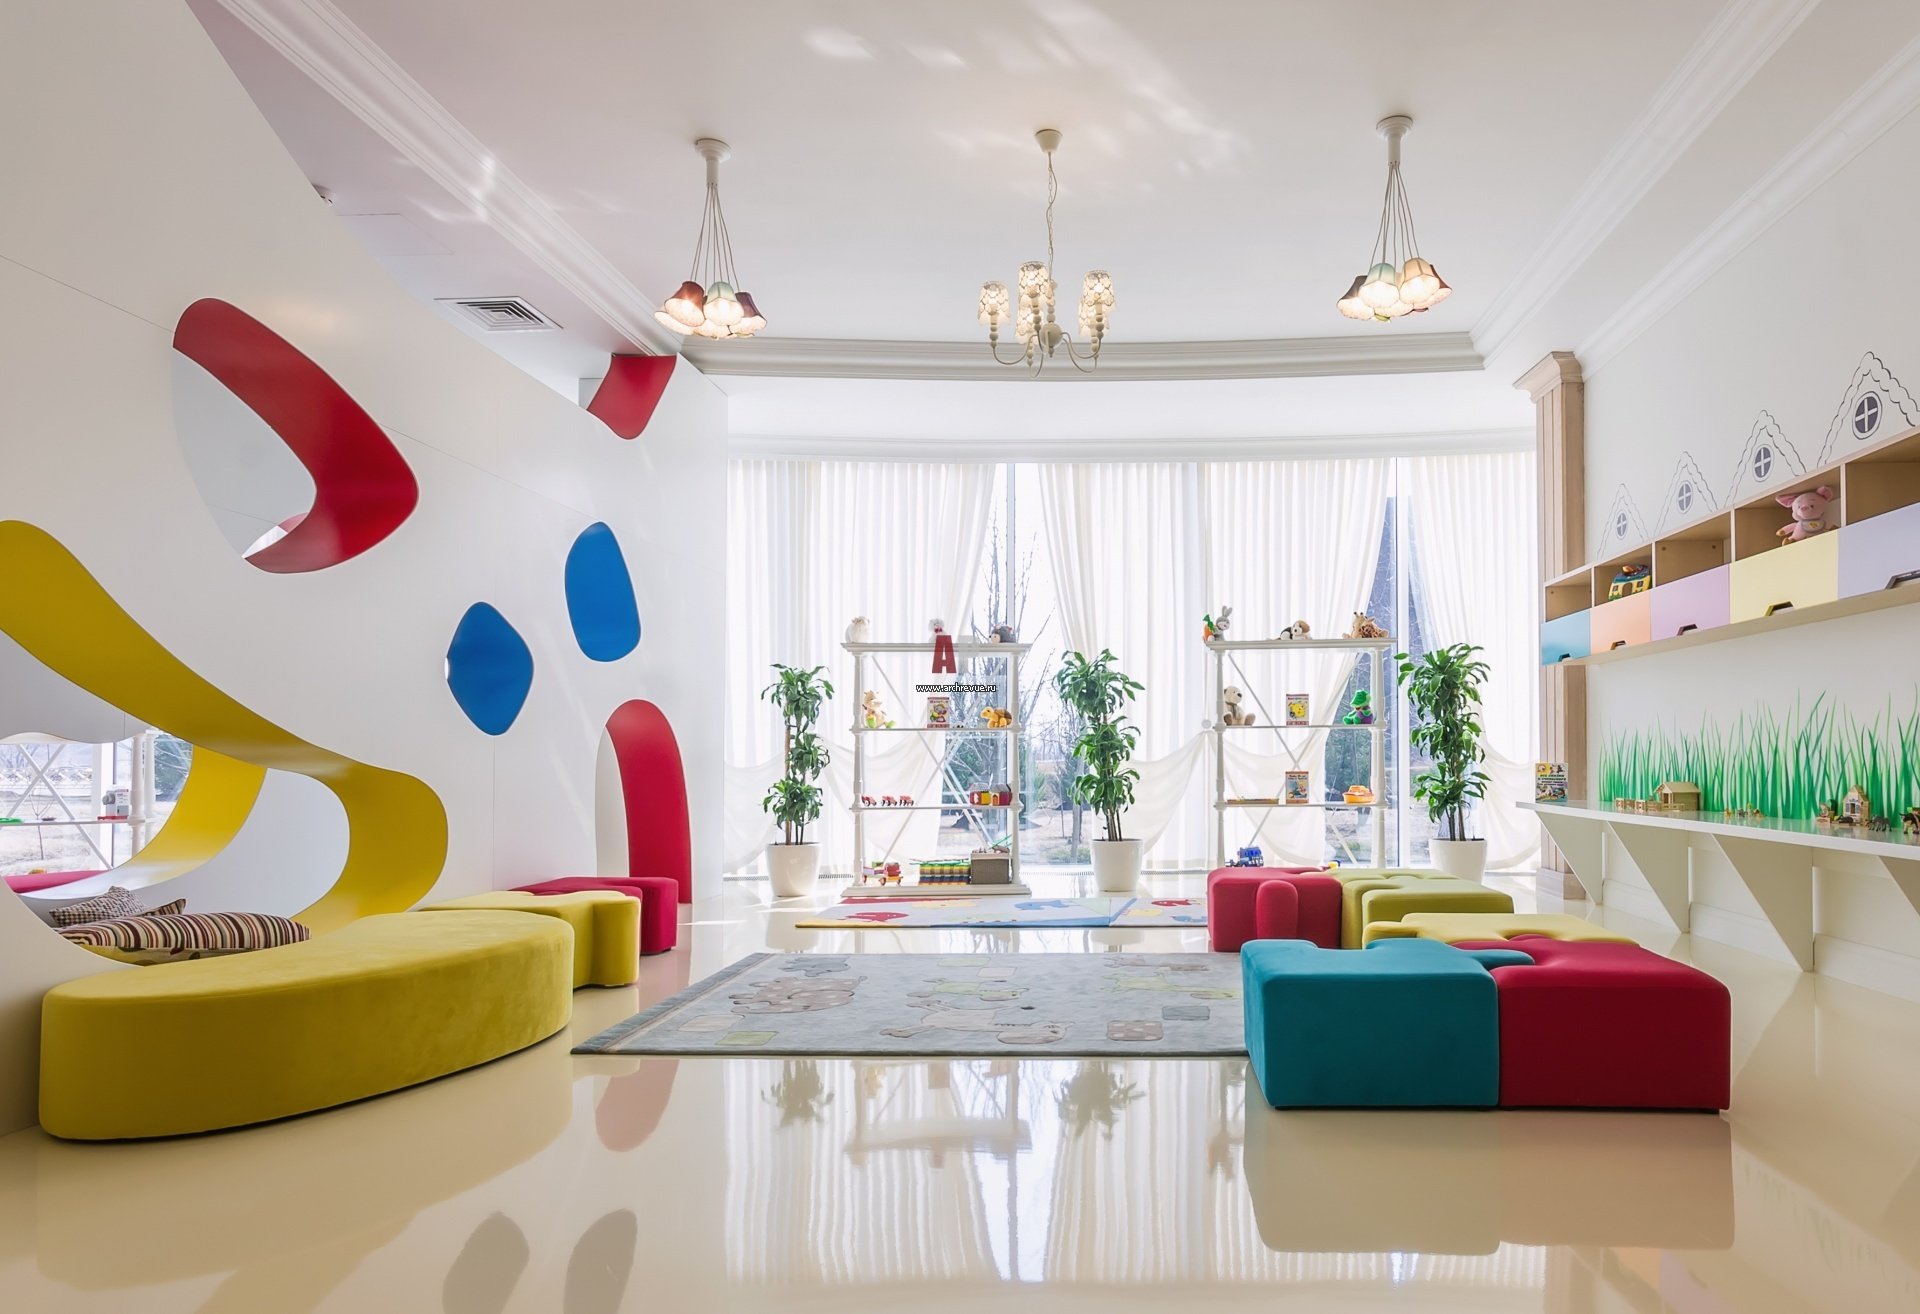 Дизайн интерьера детского сада